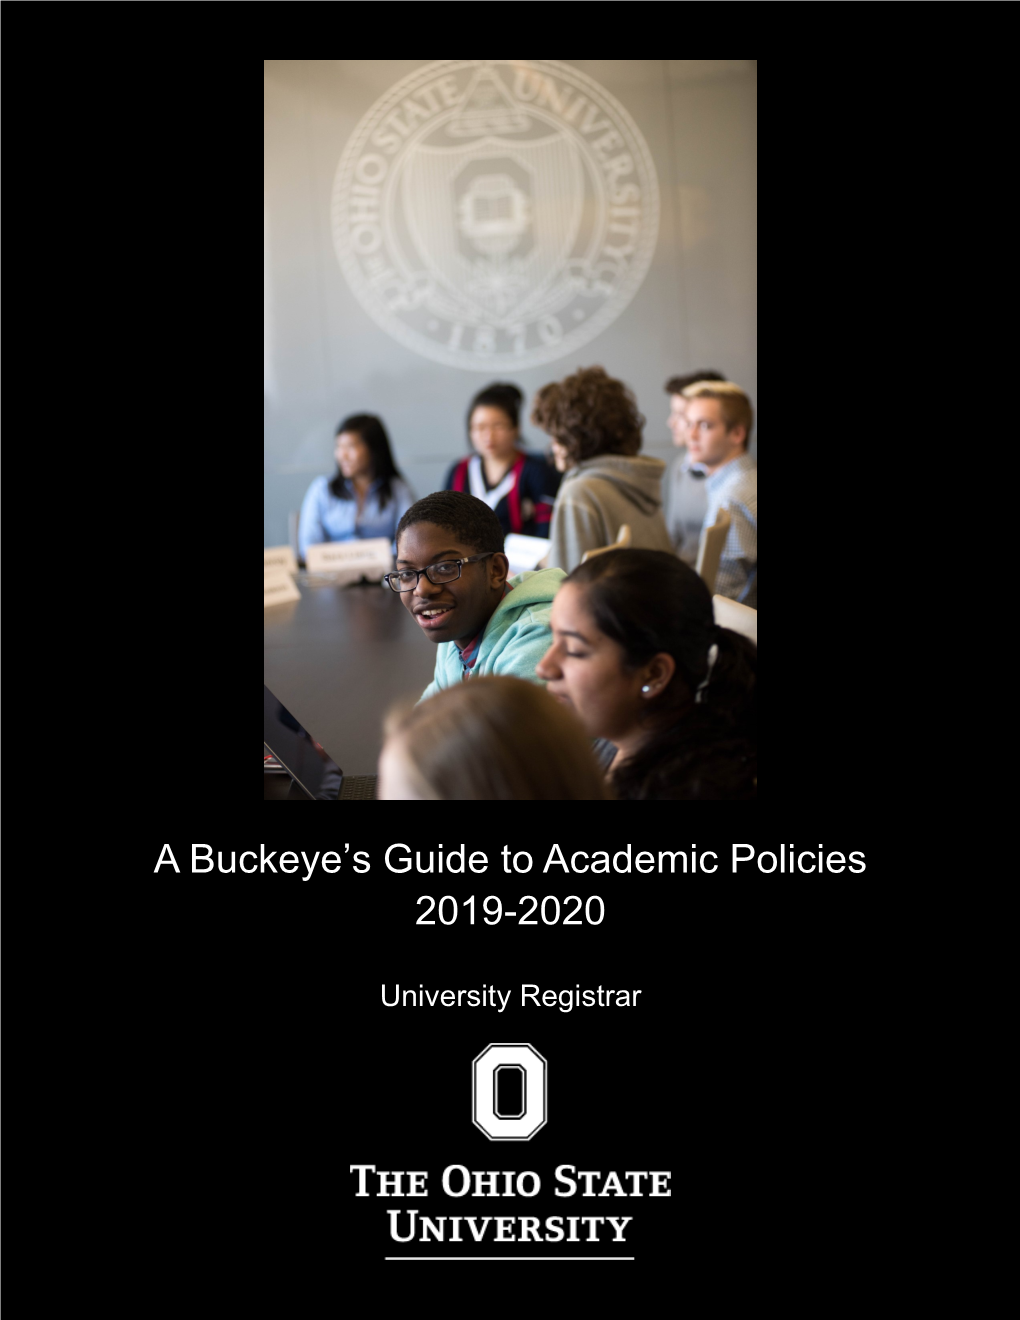 A Buckeye's Guide to Academic Policies 2019-2020